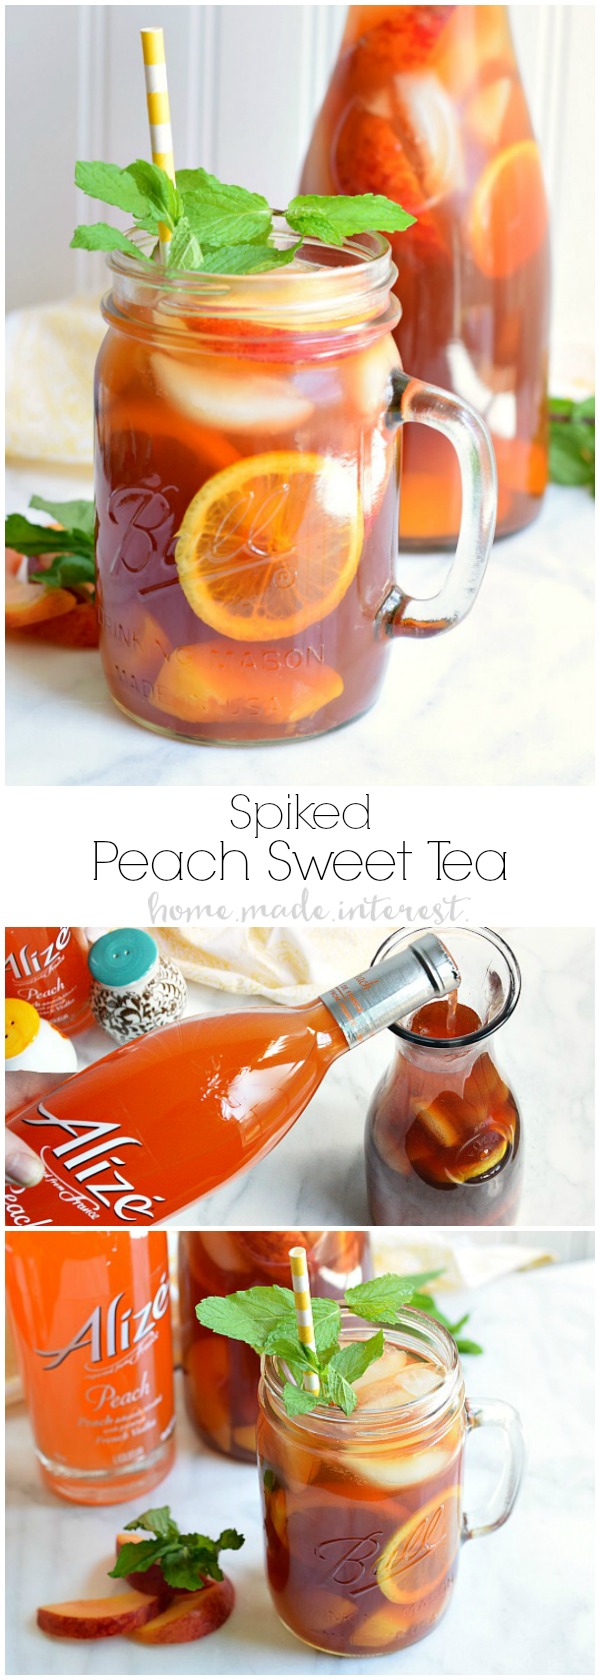 Spiked-Peach-Sweet-Tea_pinterest